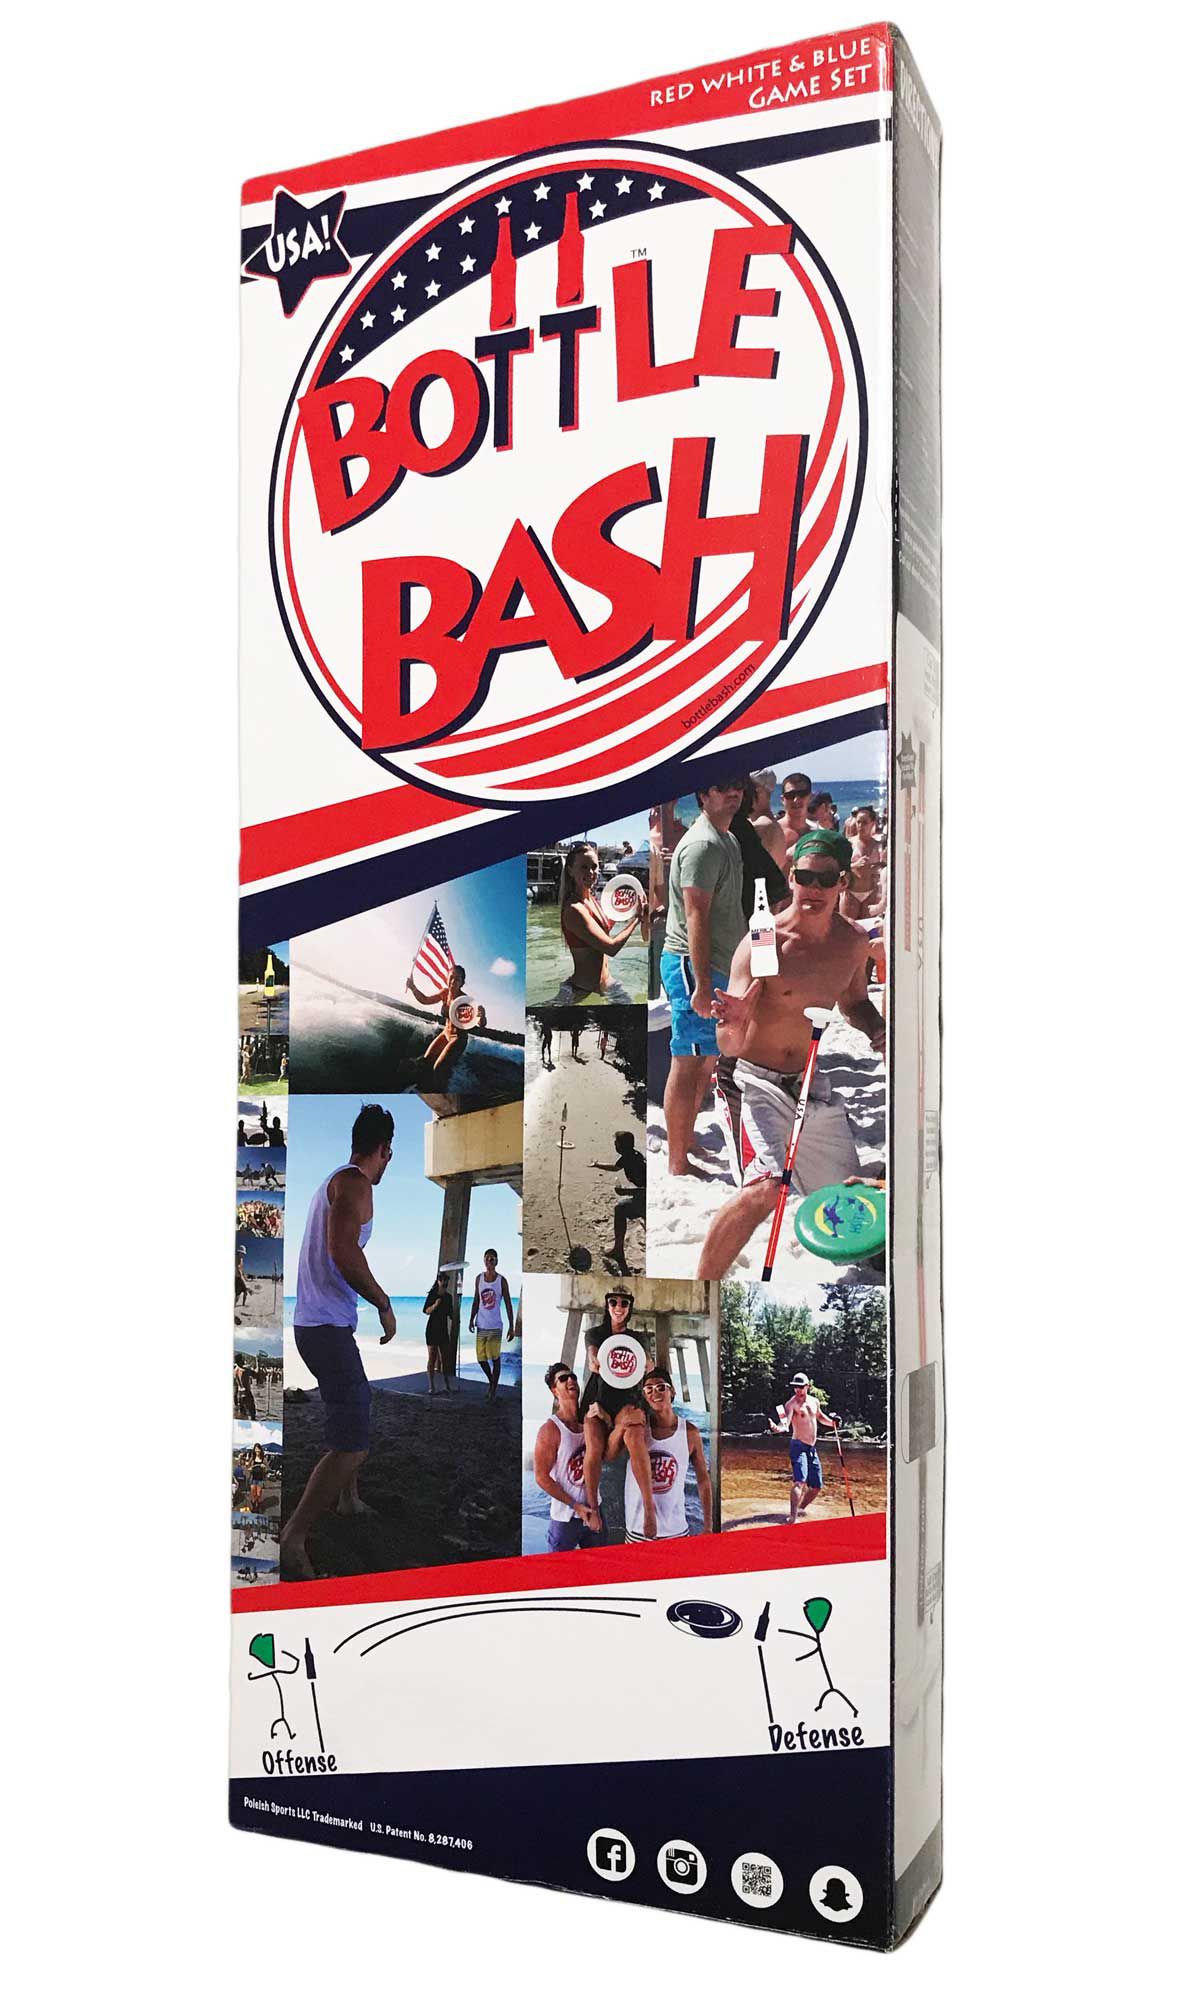 Poleish Sports Bottle Bash USA Game Set